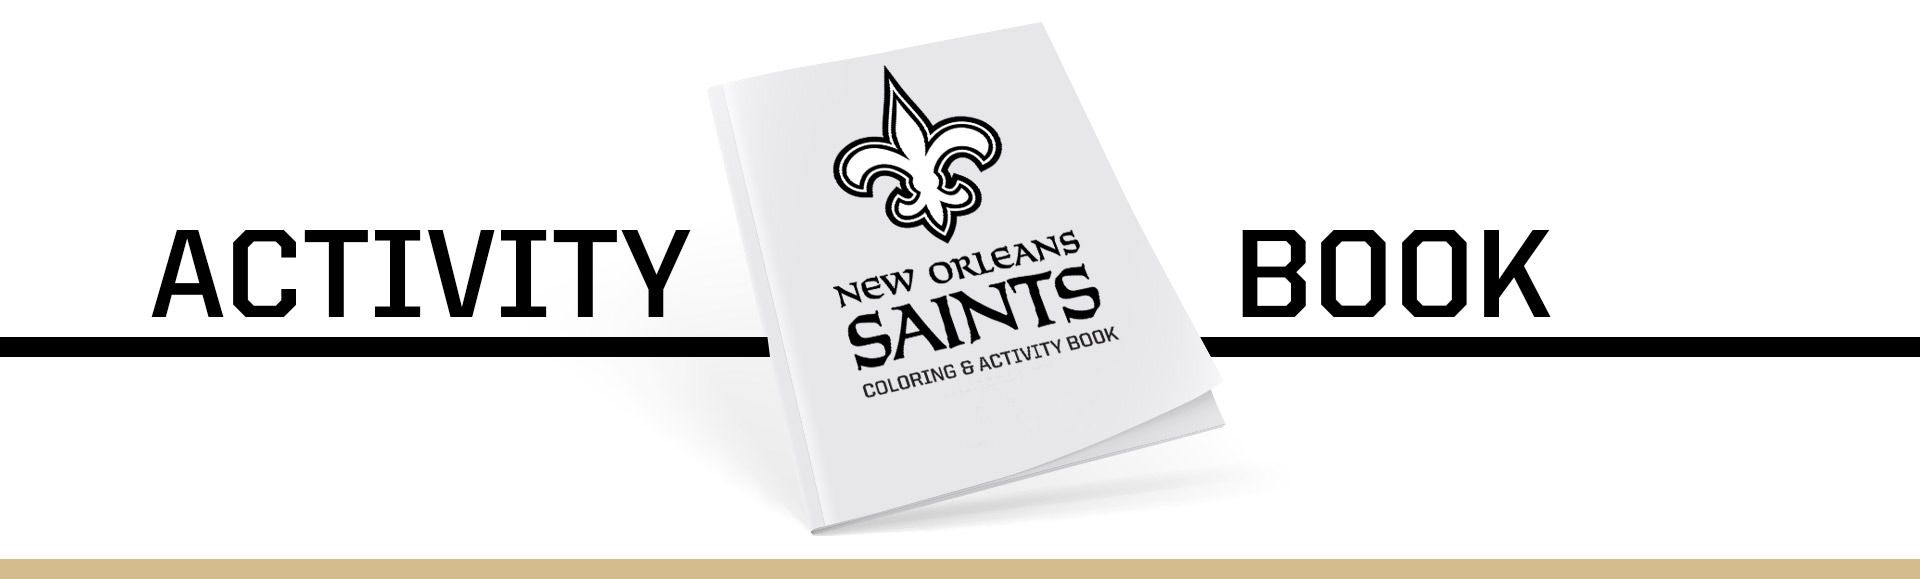 Download the new orleans saints activity book